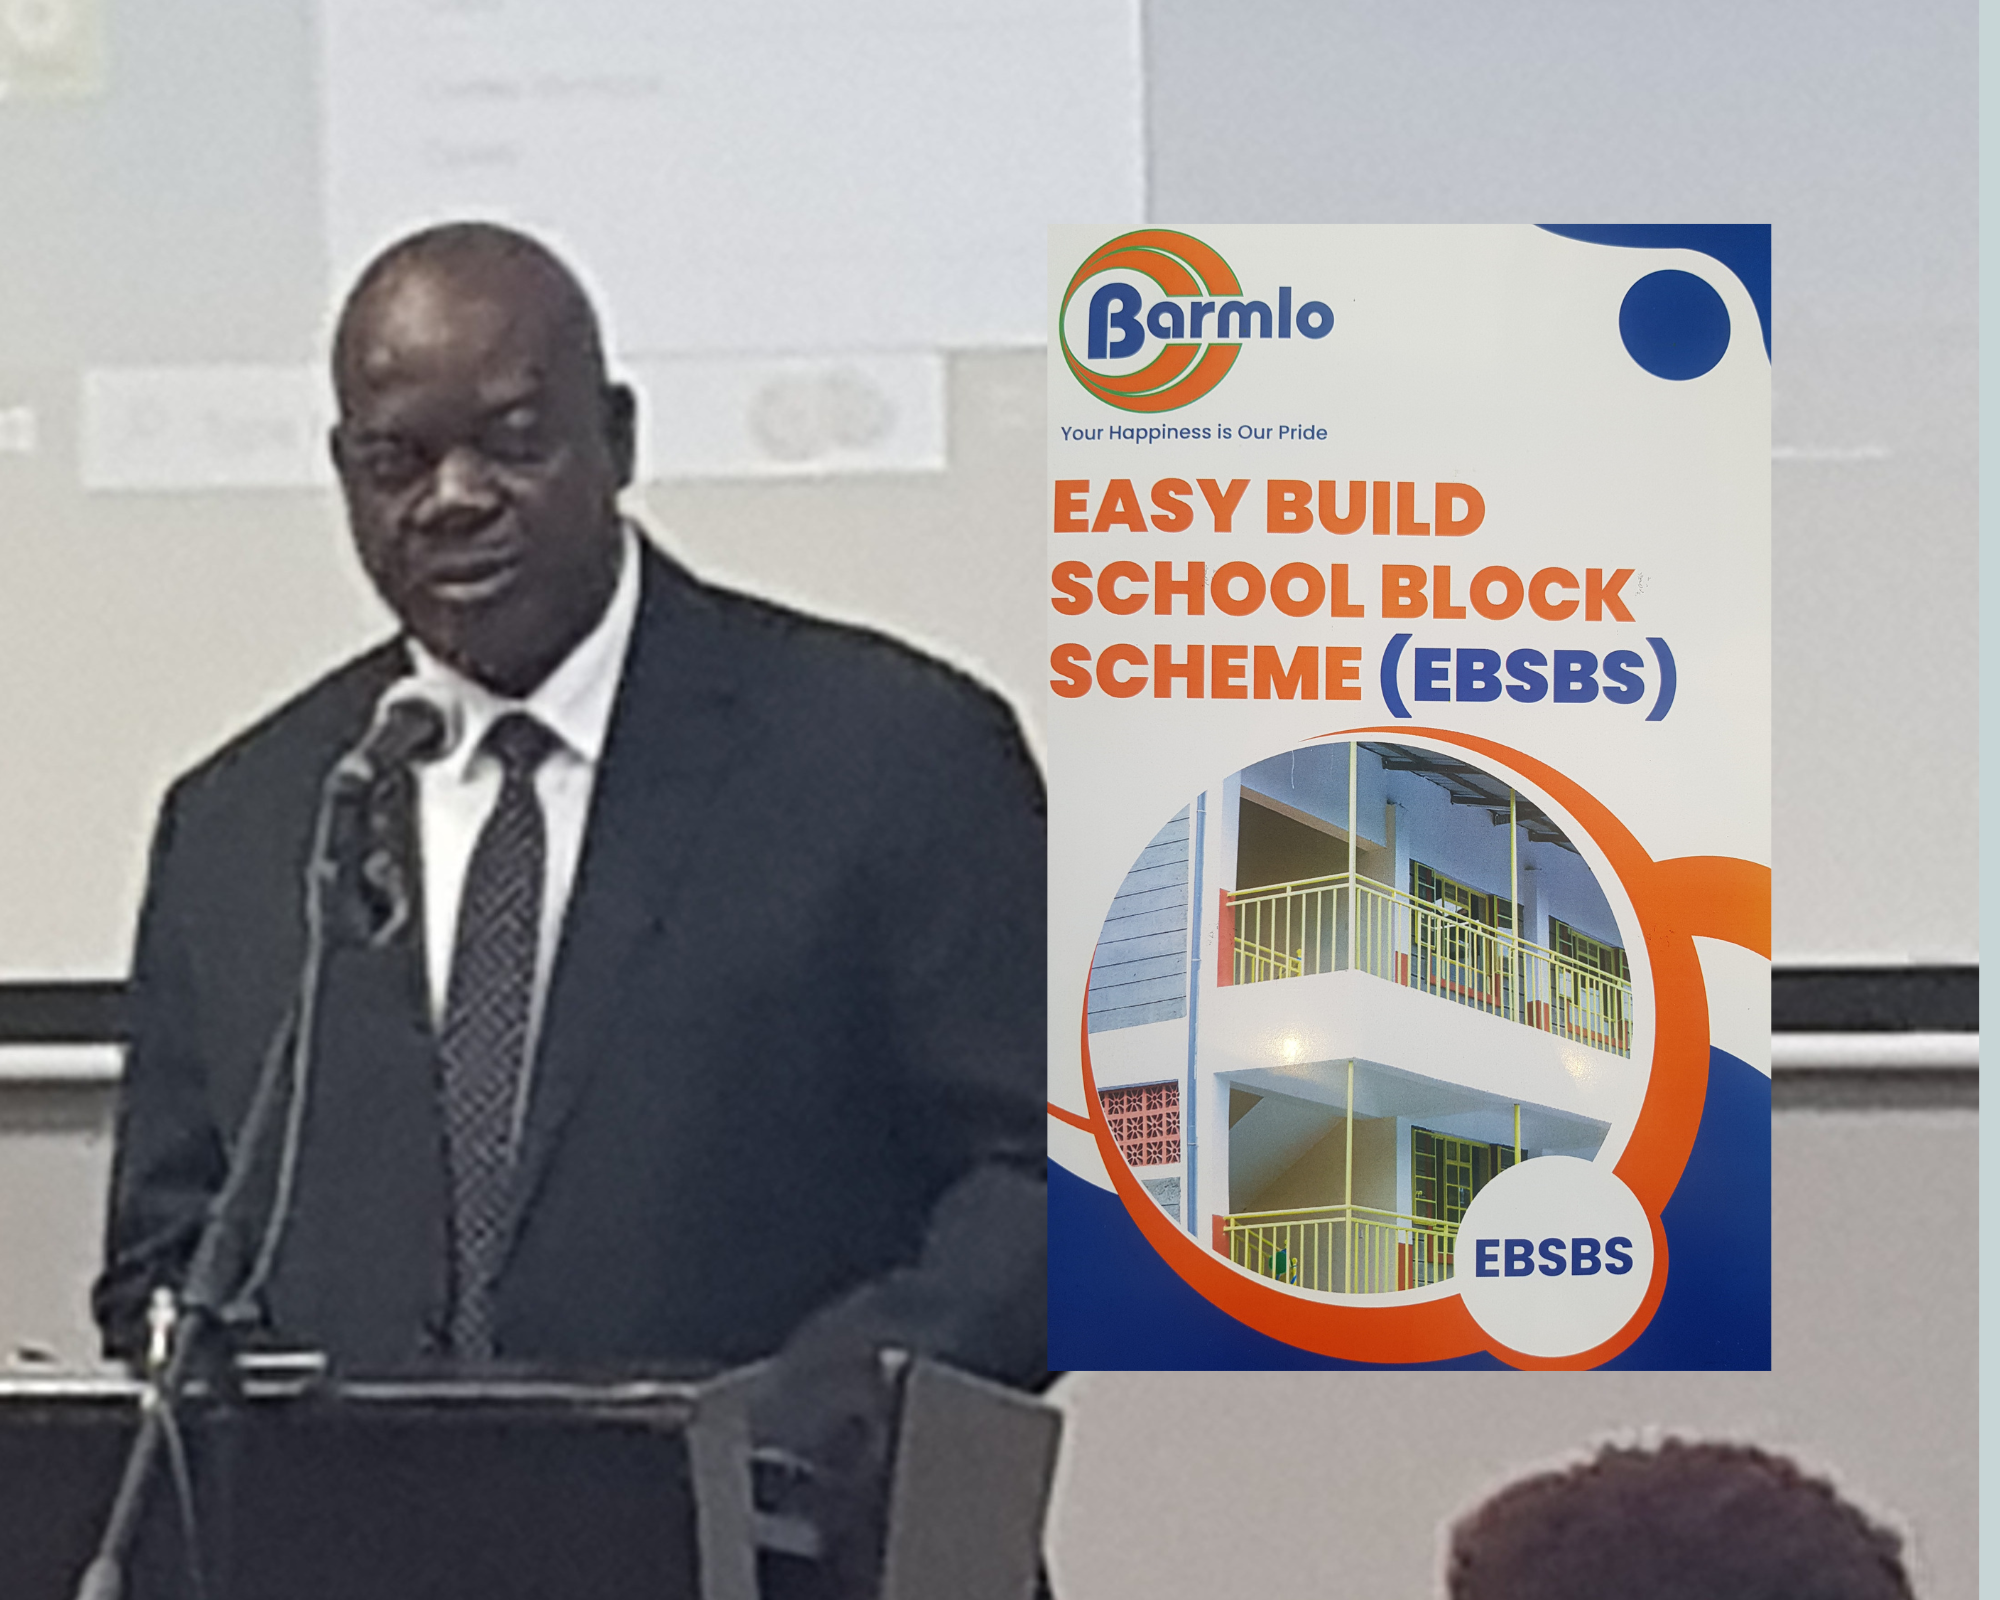 Education Minister Launches Barmlo Easy Build School Block Scheme